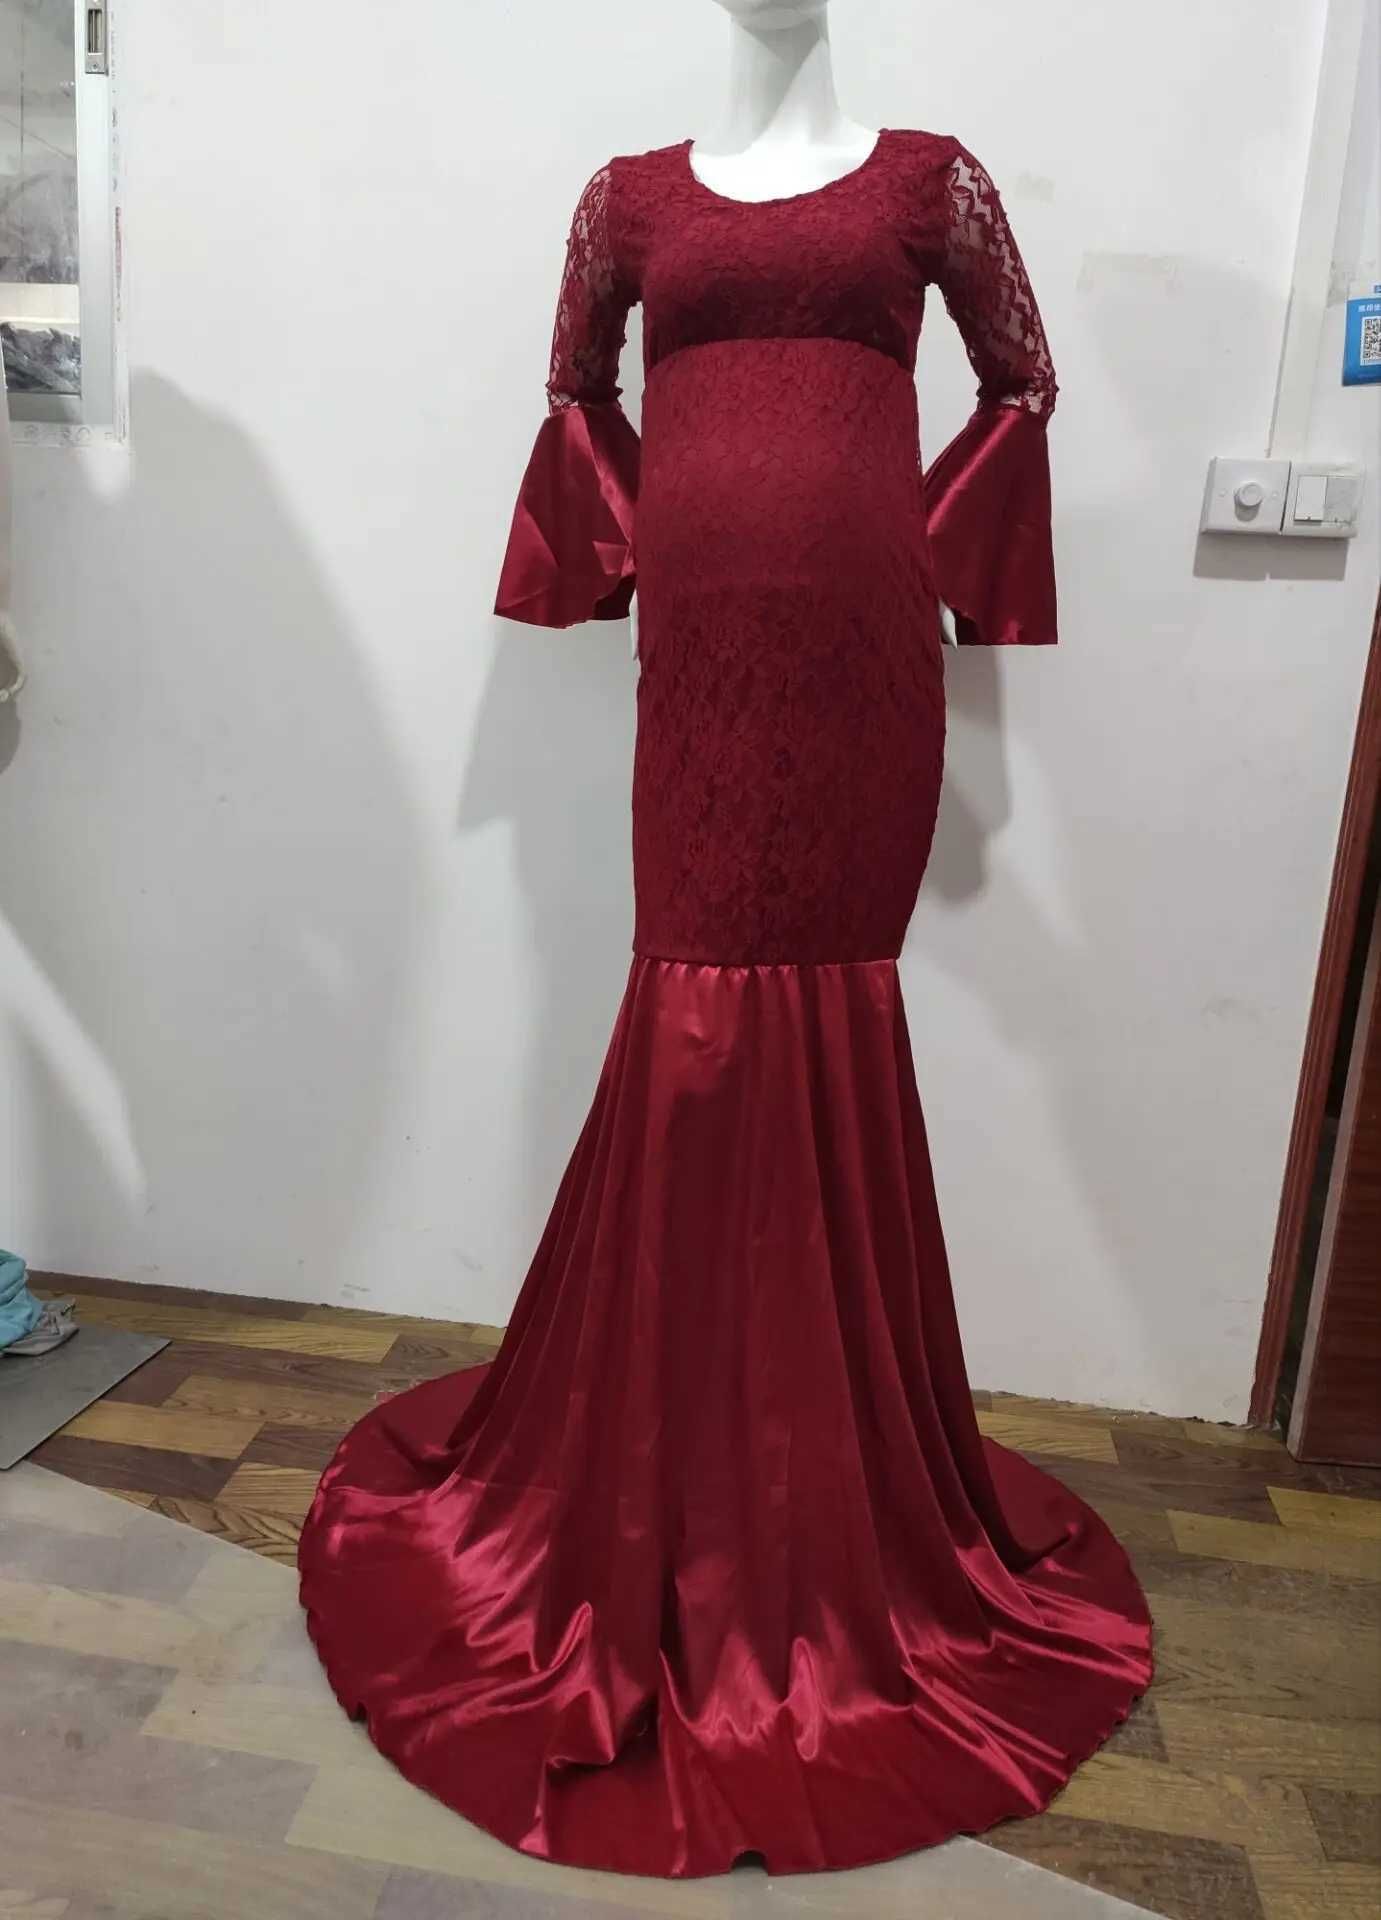 1 x Wine Red Dress